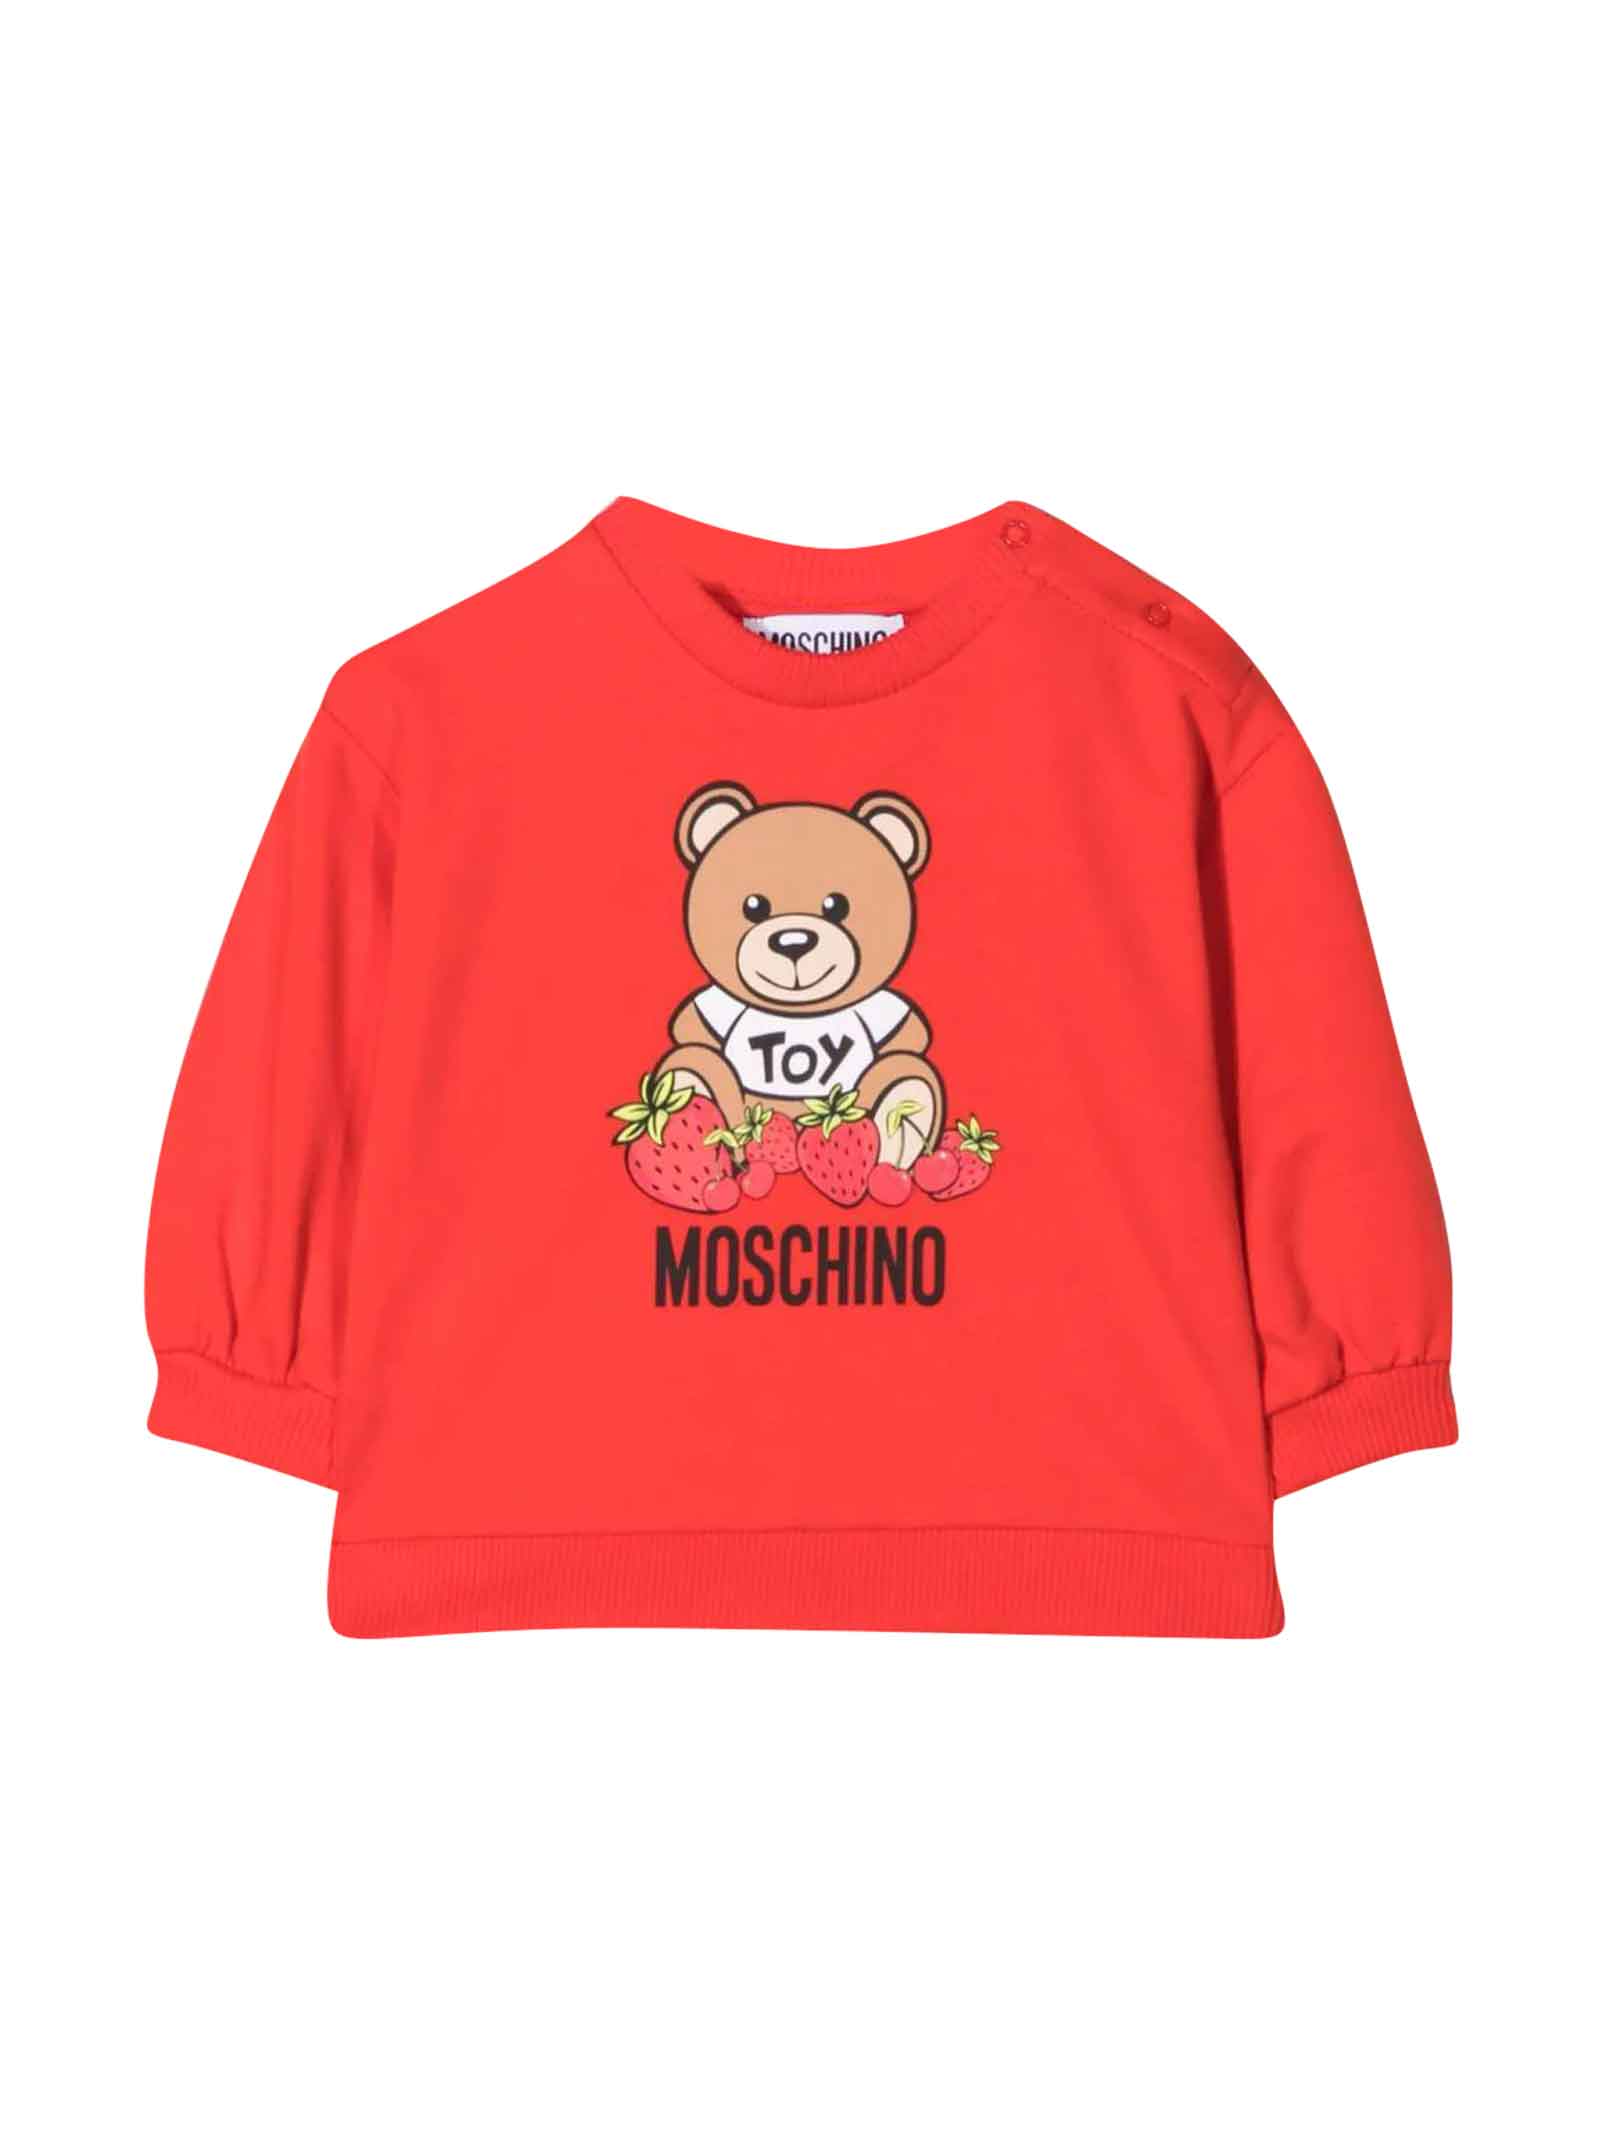 Moschino Red Sweater Teddy Bear Baby